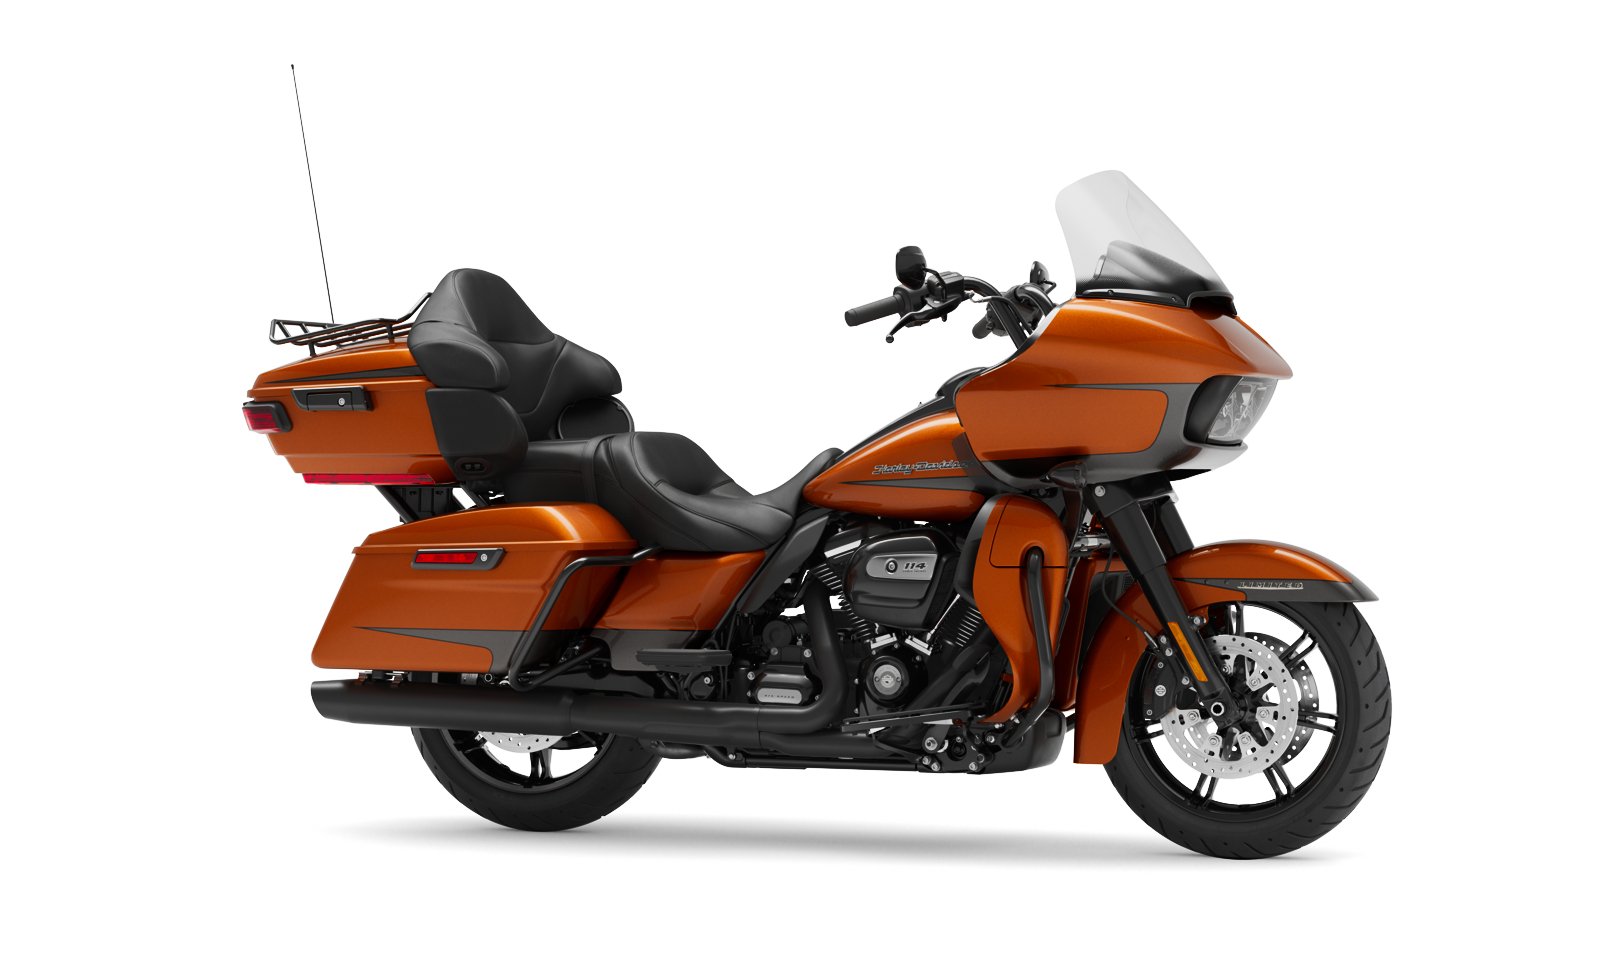 2020 Road Glide Limited Motorcycle Harley Davidson Middle East